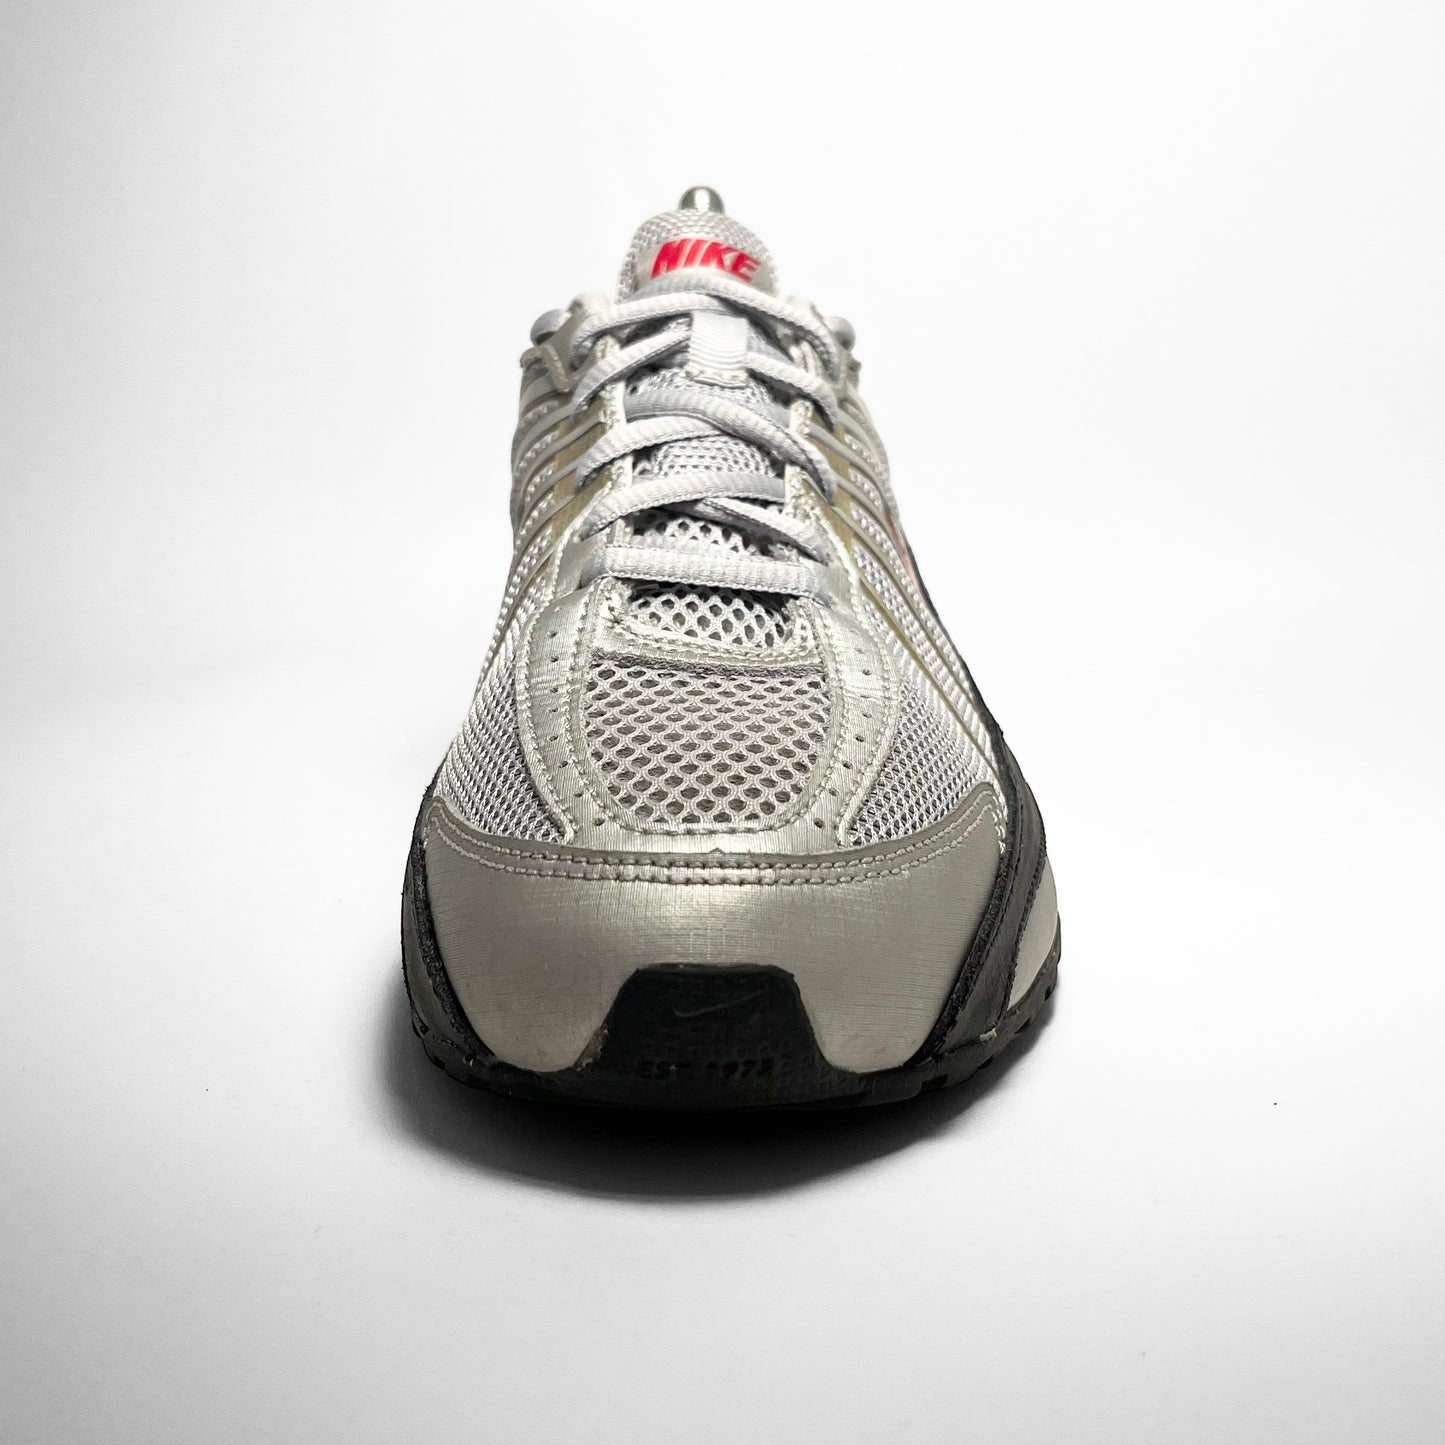 Nike Shox Turbo VII (2008)